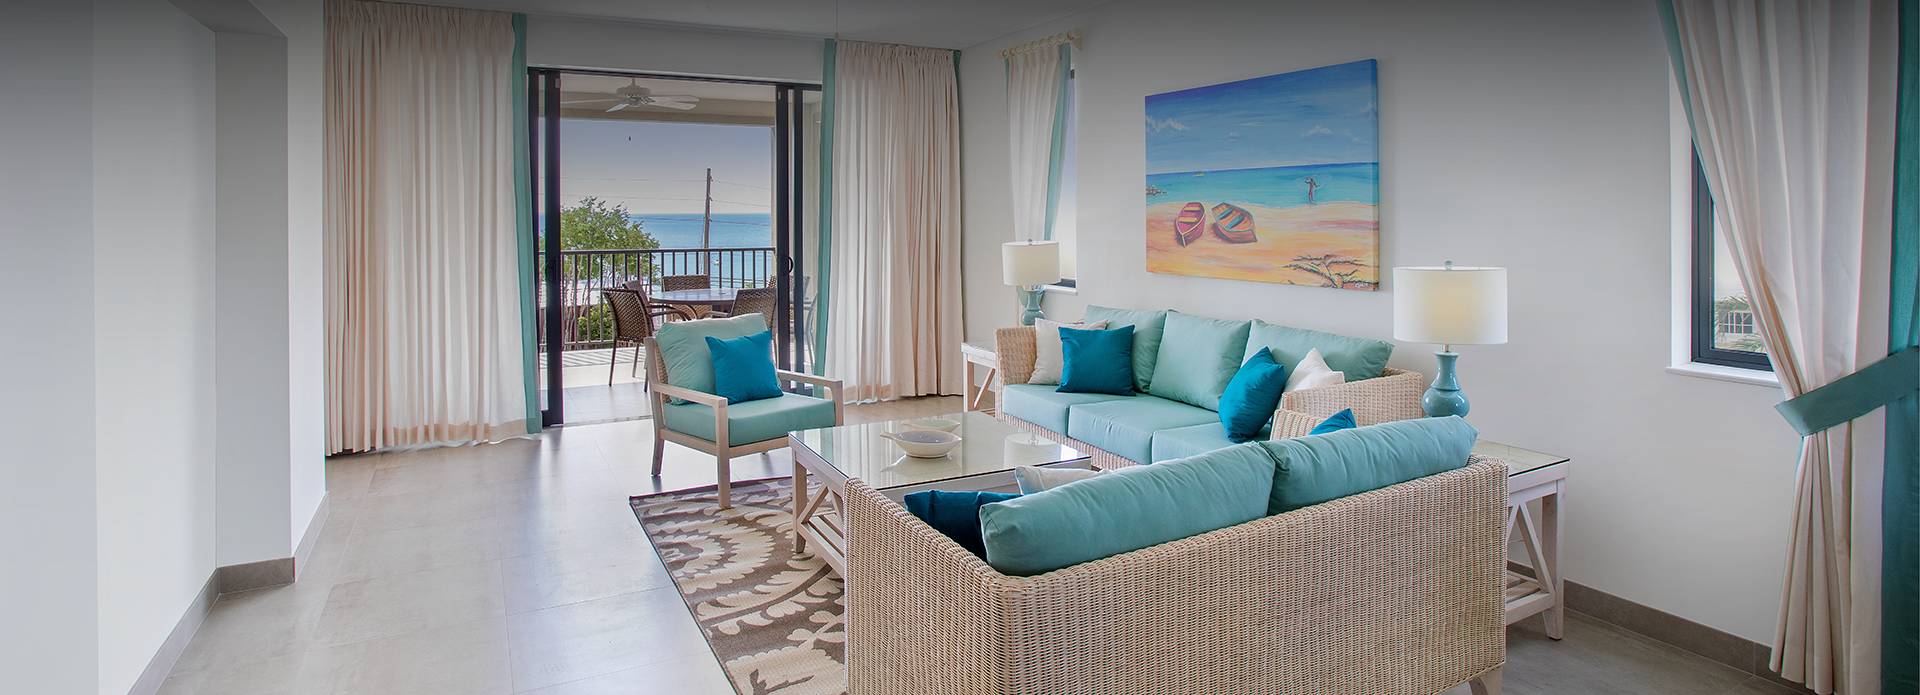 Beach View Barbados - Luxury Passion Fruit Suites